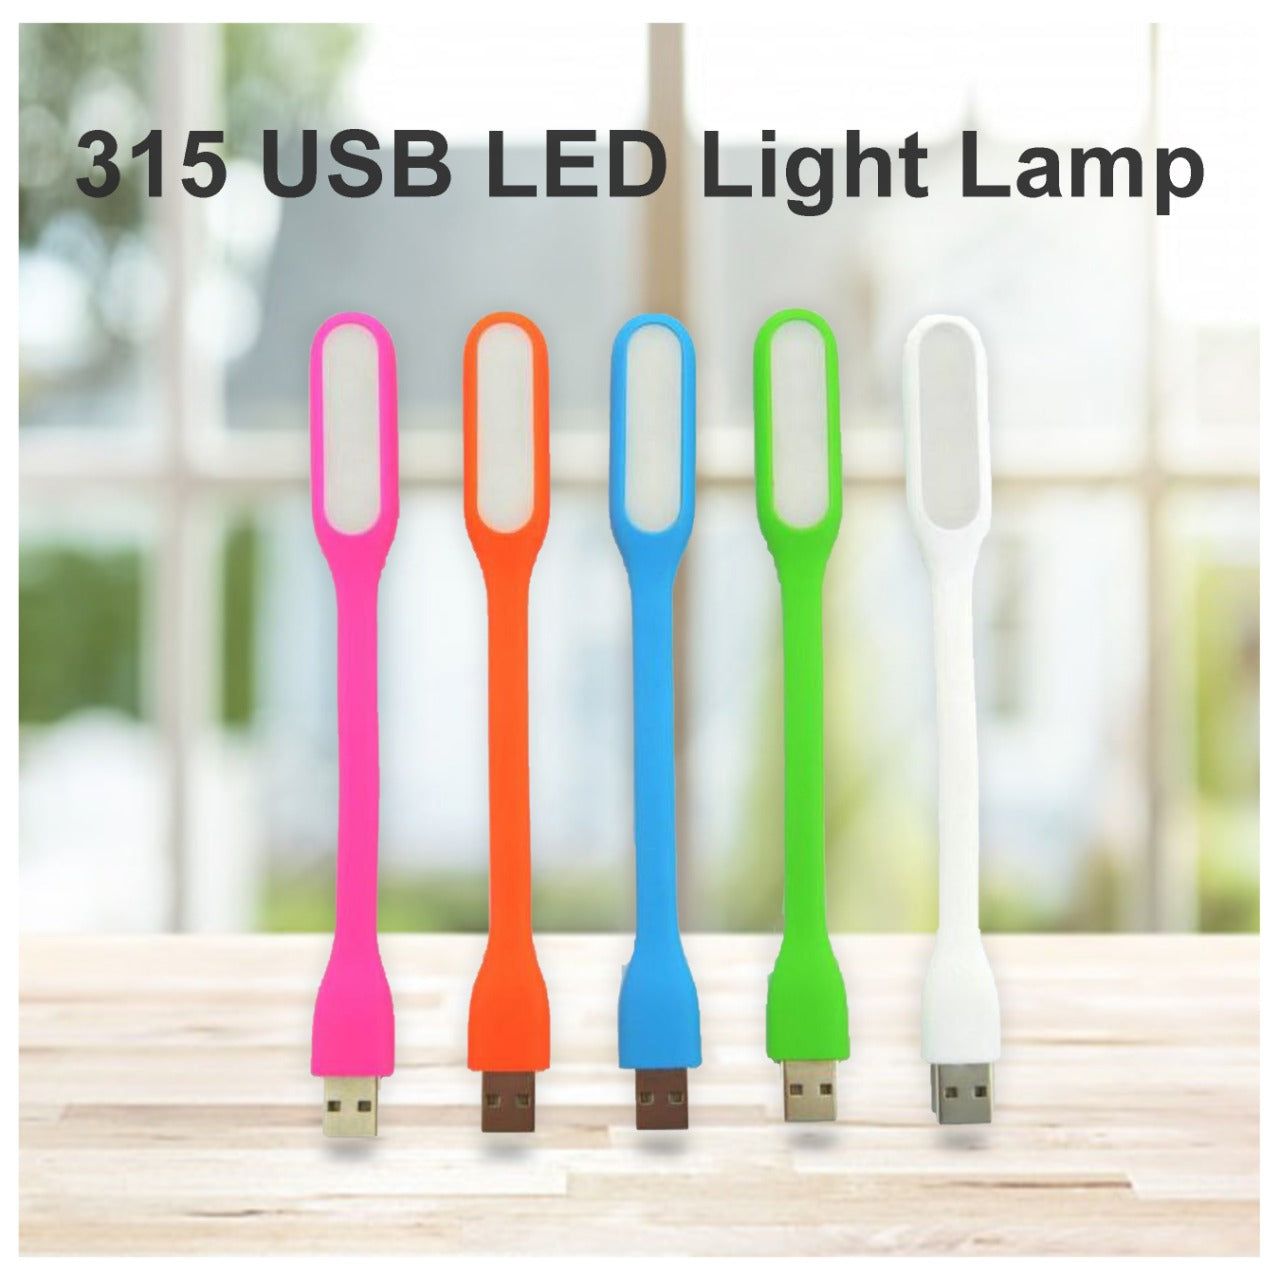 315 USB LED Light Lamp Deodap